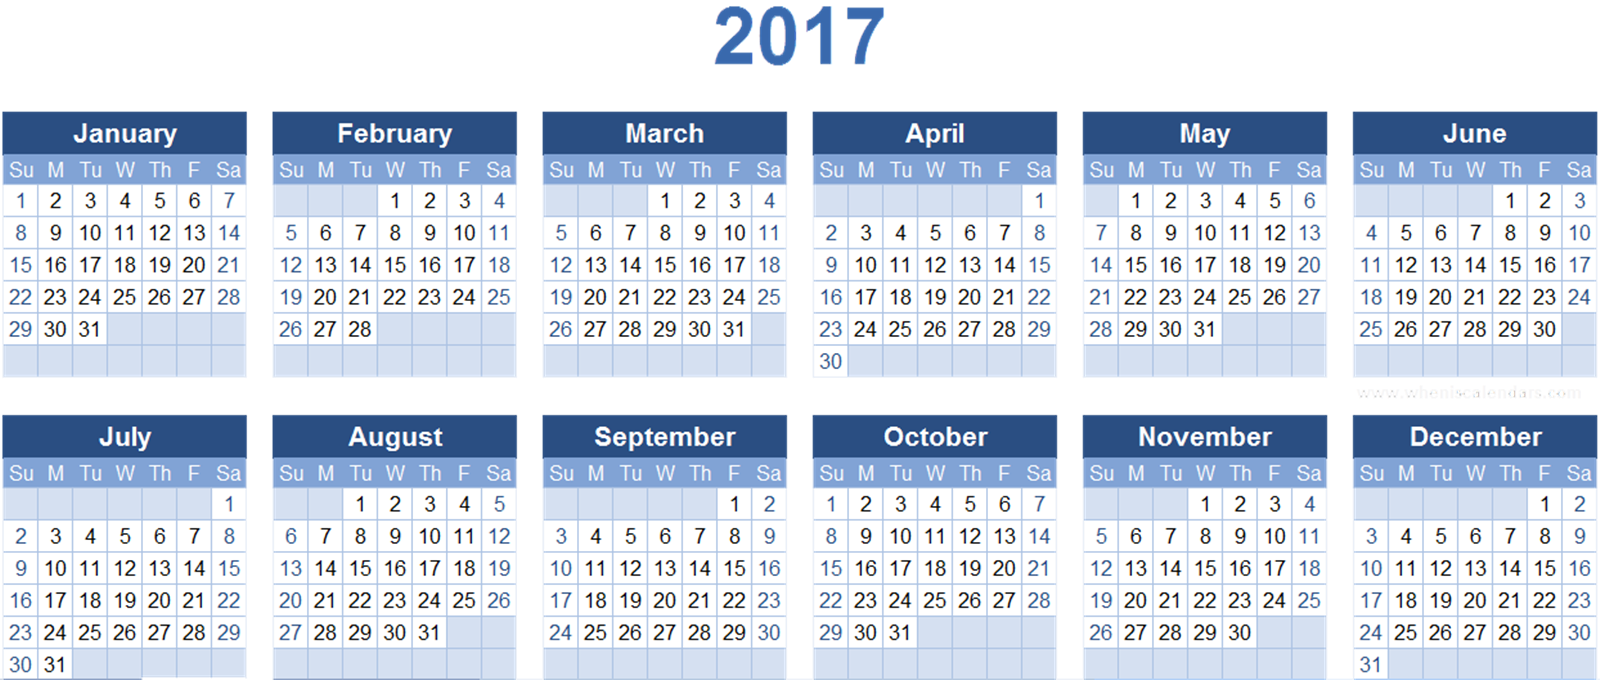 2017-calendar-school-holidays-nsw-clip-art-library